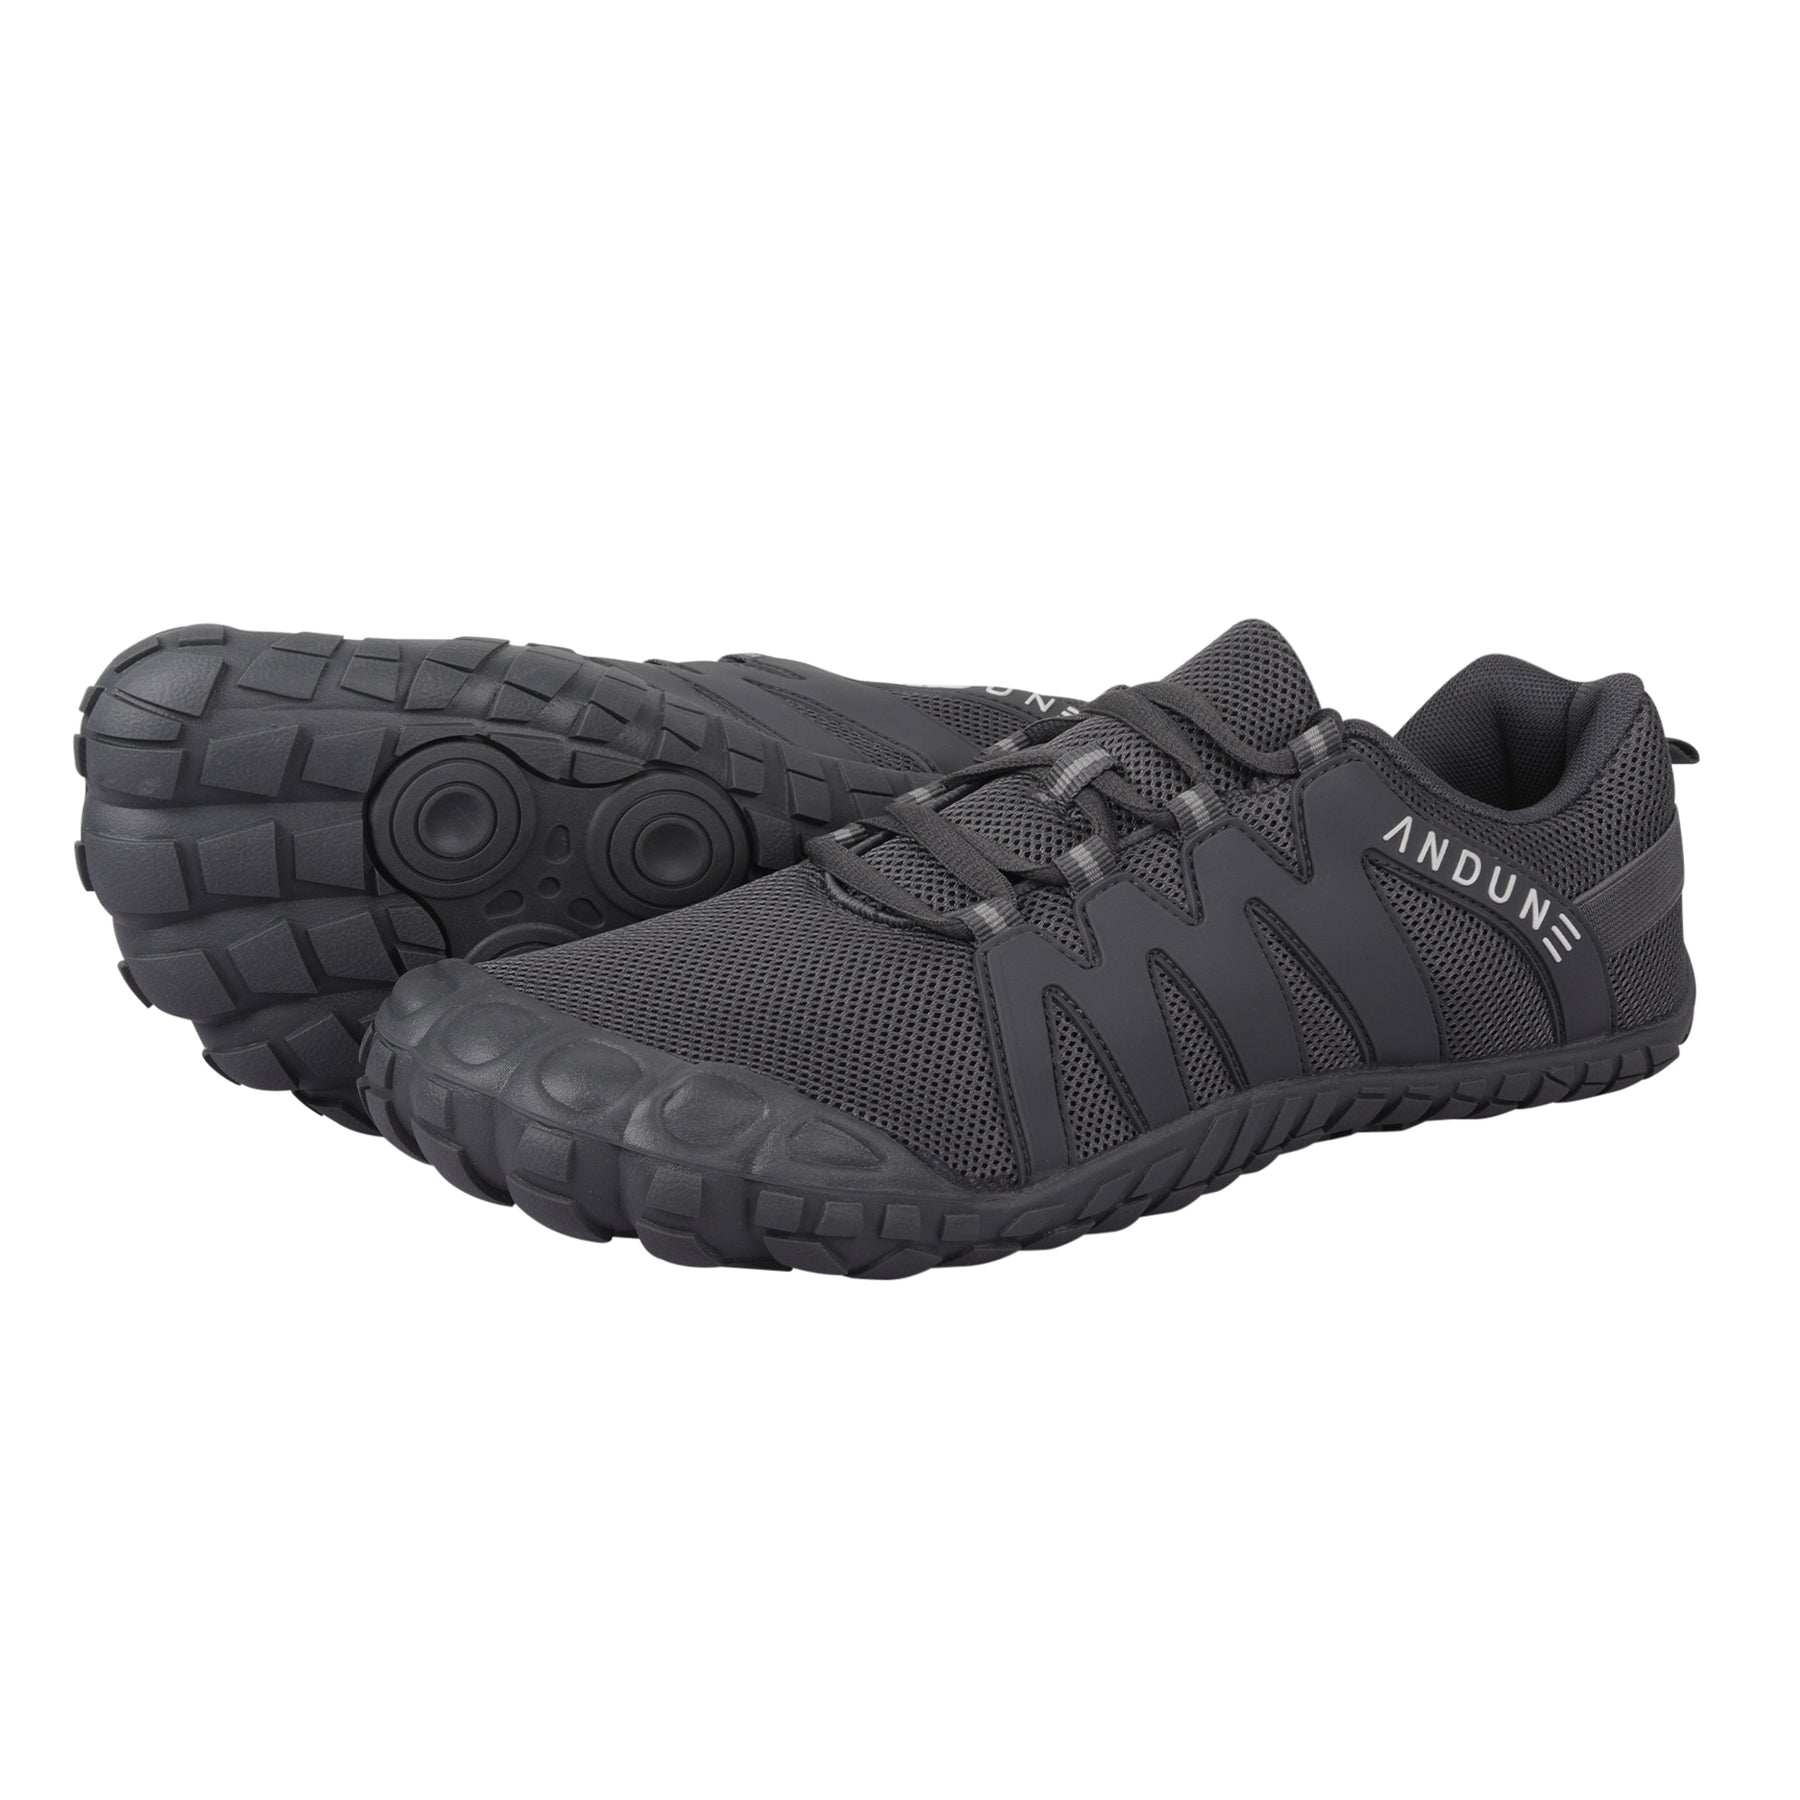 ANDUNE Men’s Barefoot & Minimalist Cross Training Shoes – All Terrain Grey Dash